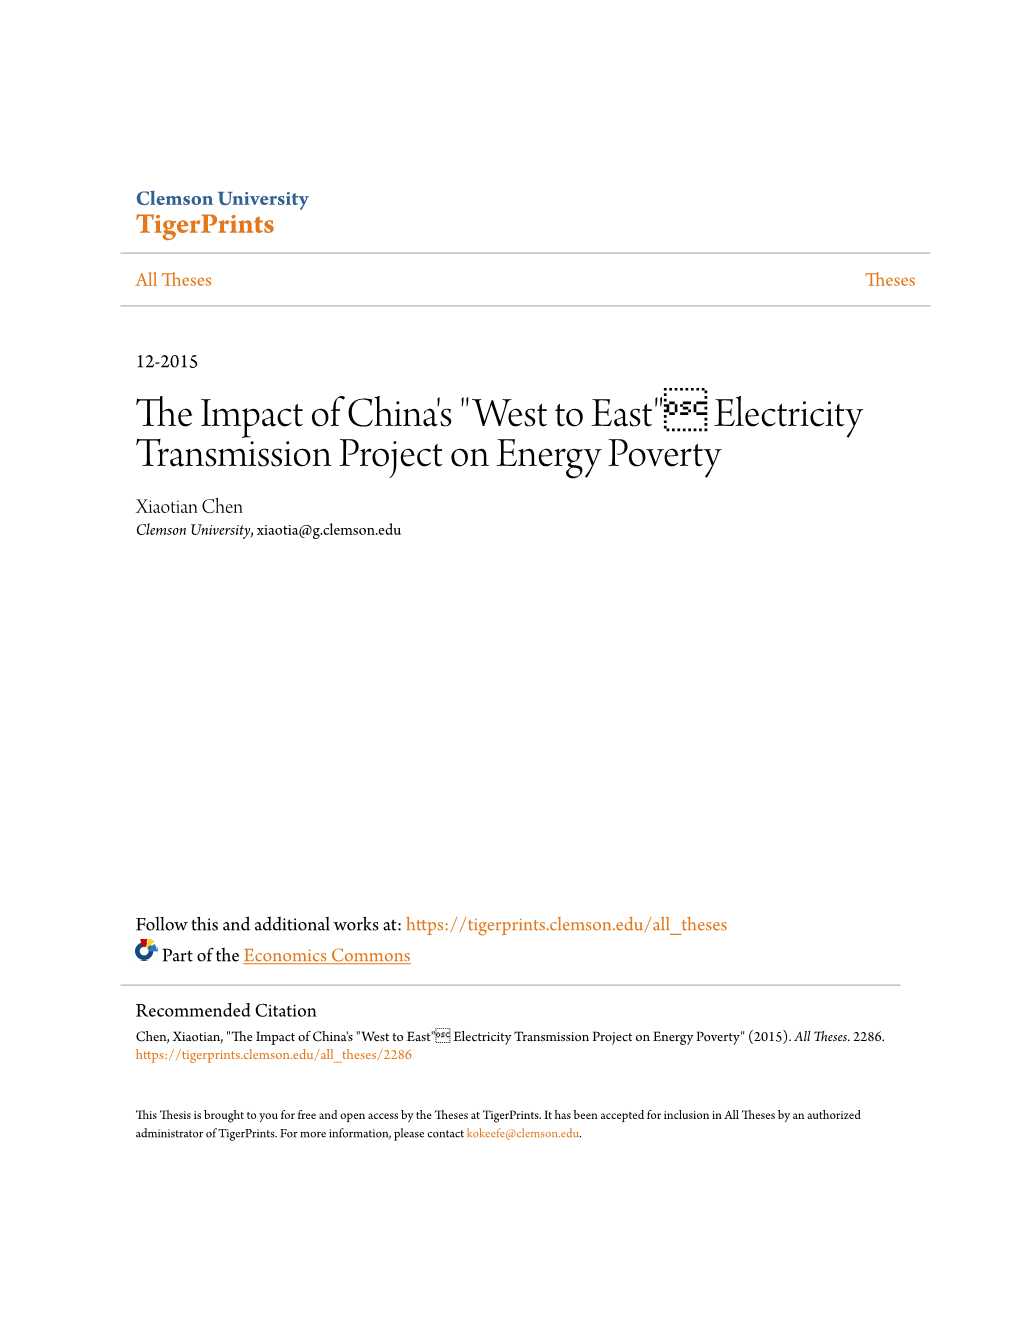 Electricity Transmission Project on Energy Poverty Xiaotian Chen Clemson University, Xiaotia@G.Clemson.Edu